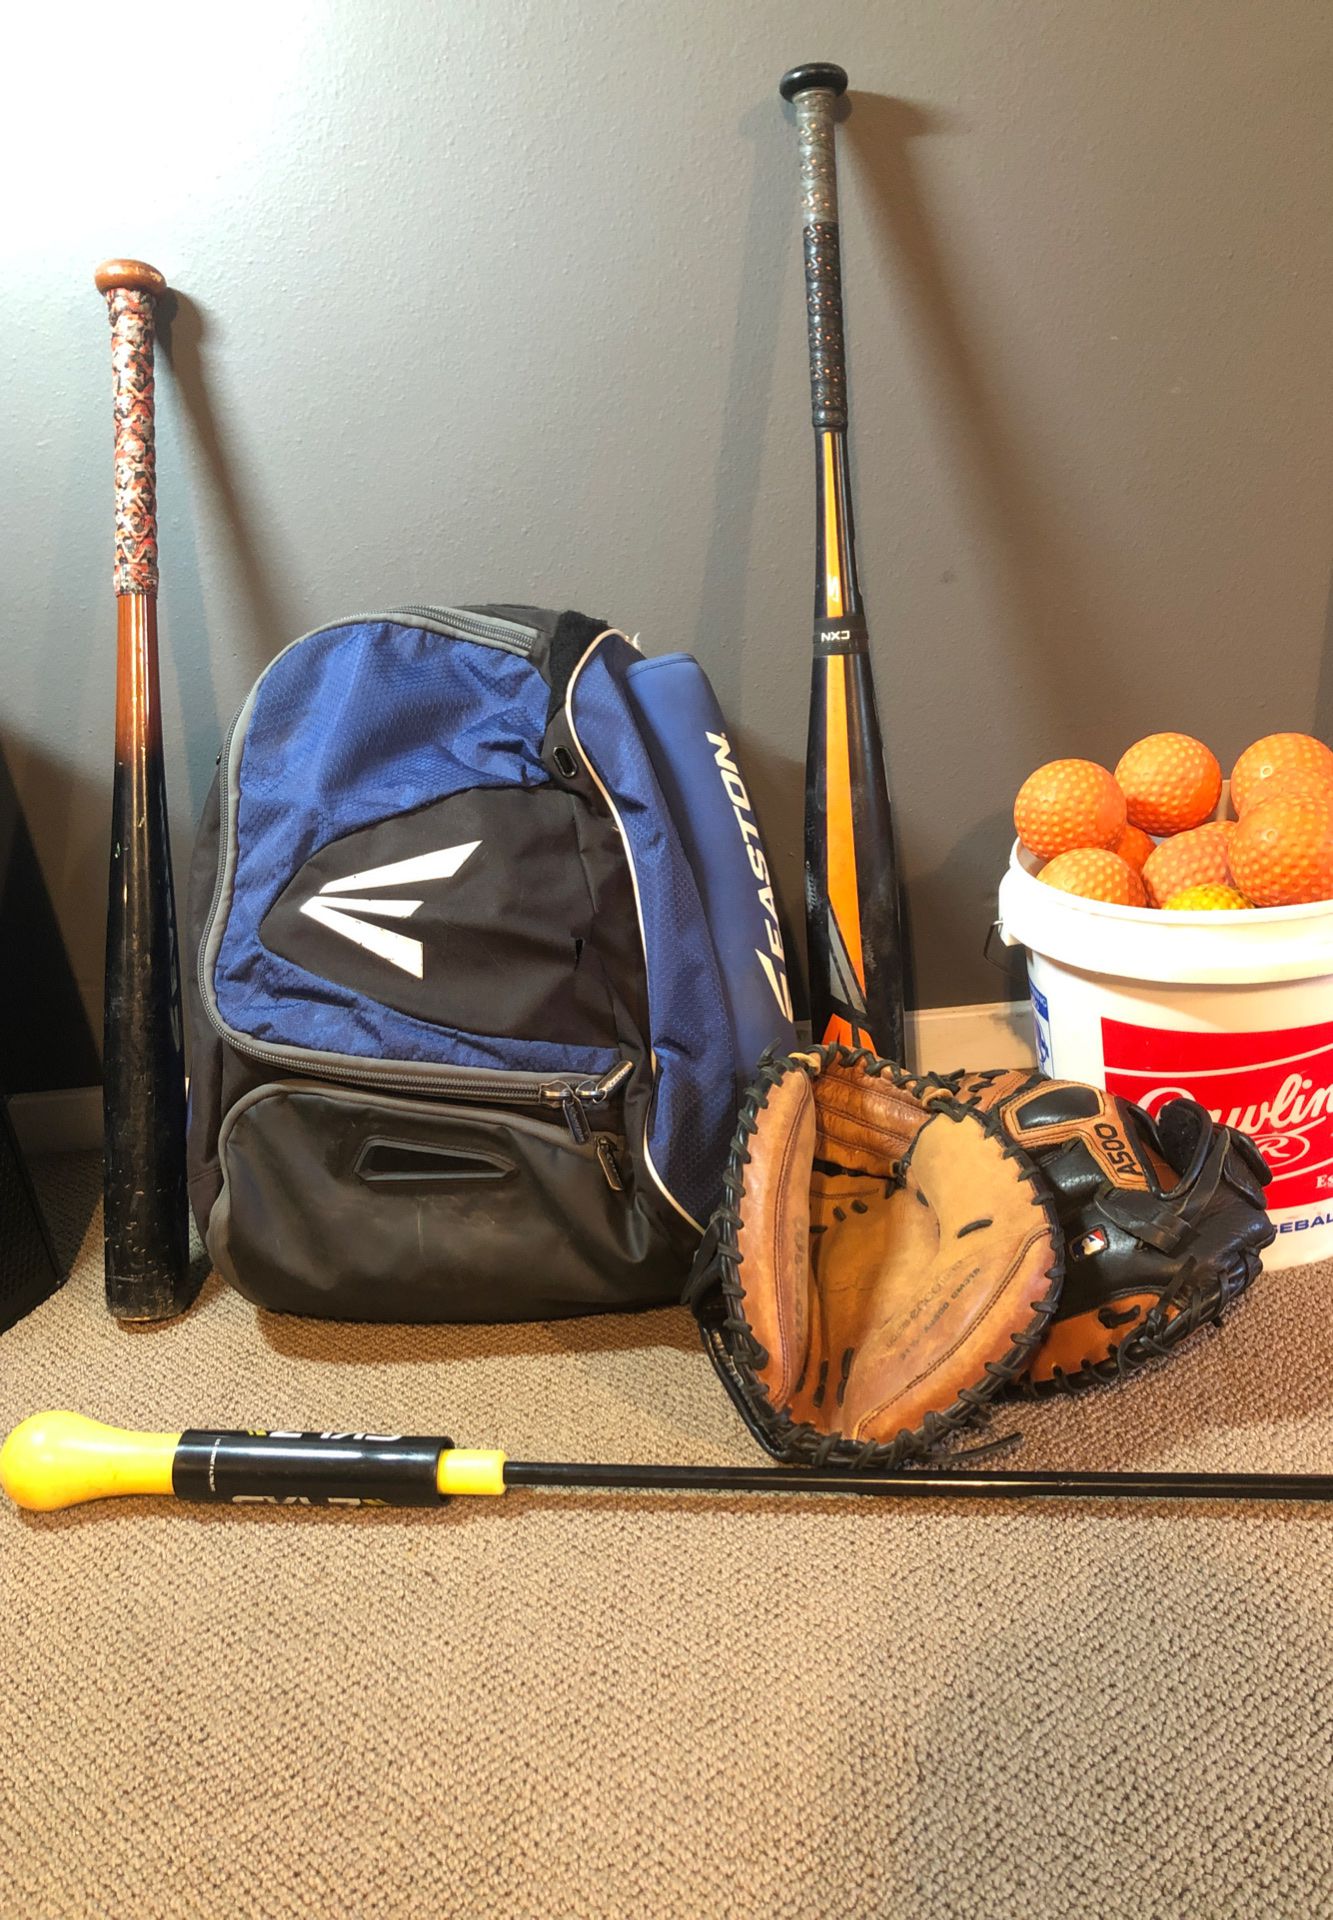 Easton bag and bat, dimple balls, 2 Wilson A500 catchers gloves, skilz swing trainer & bamboo bat